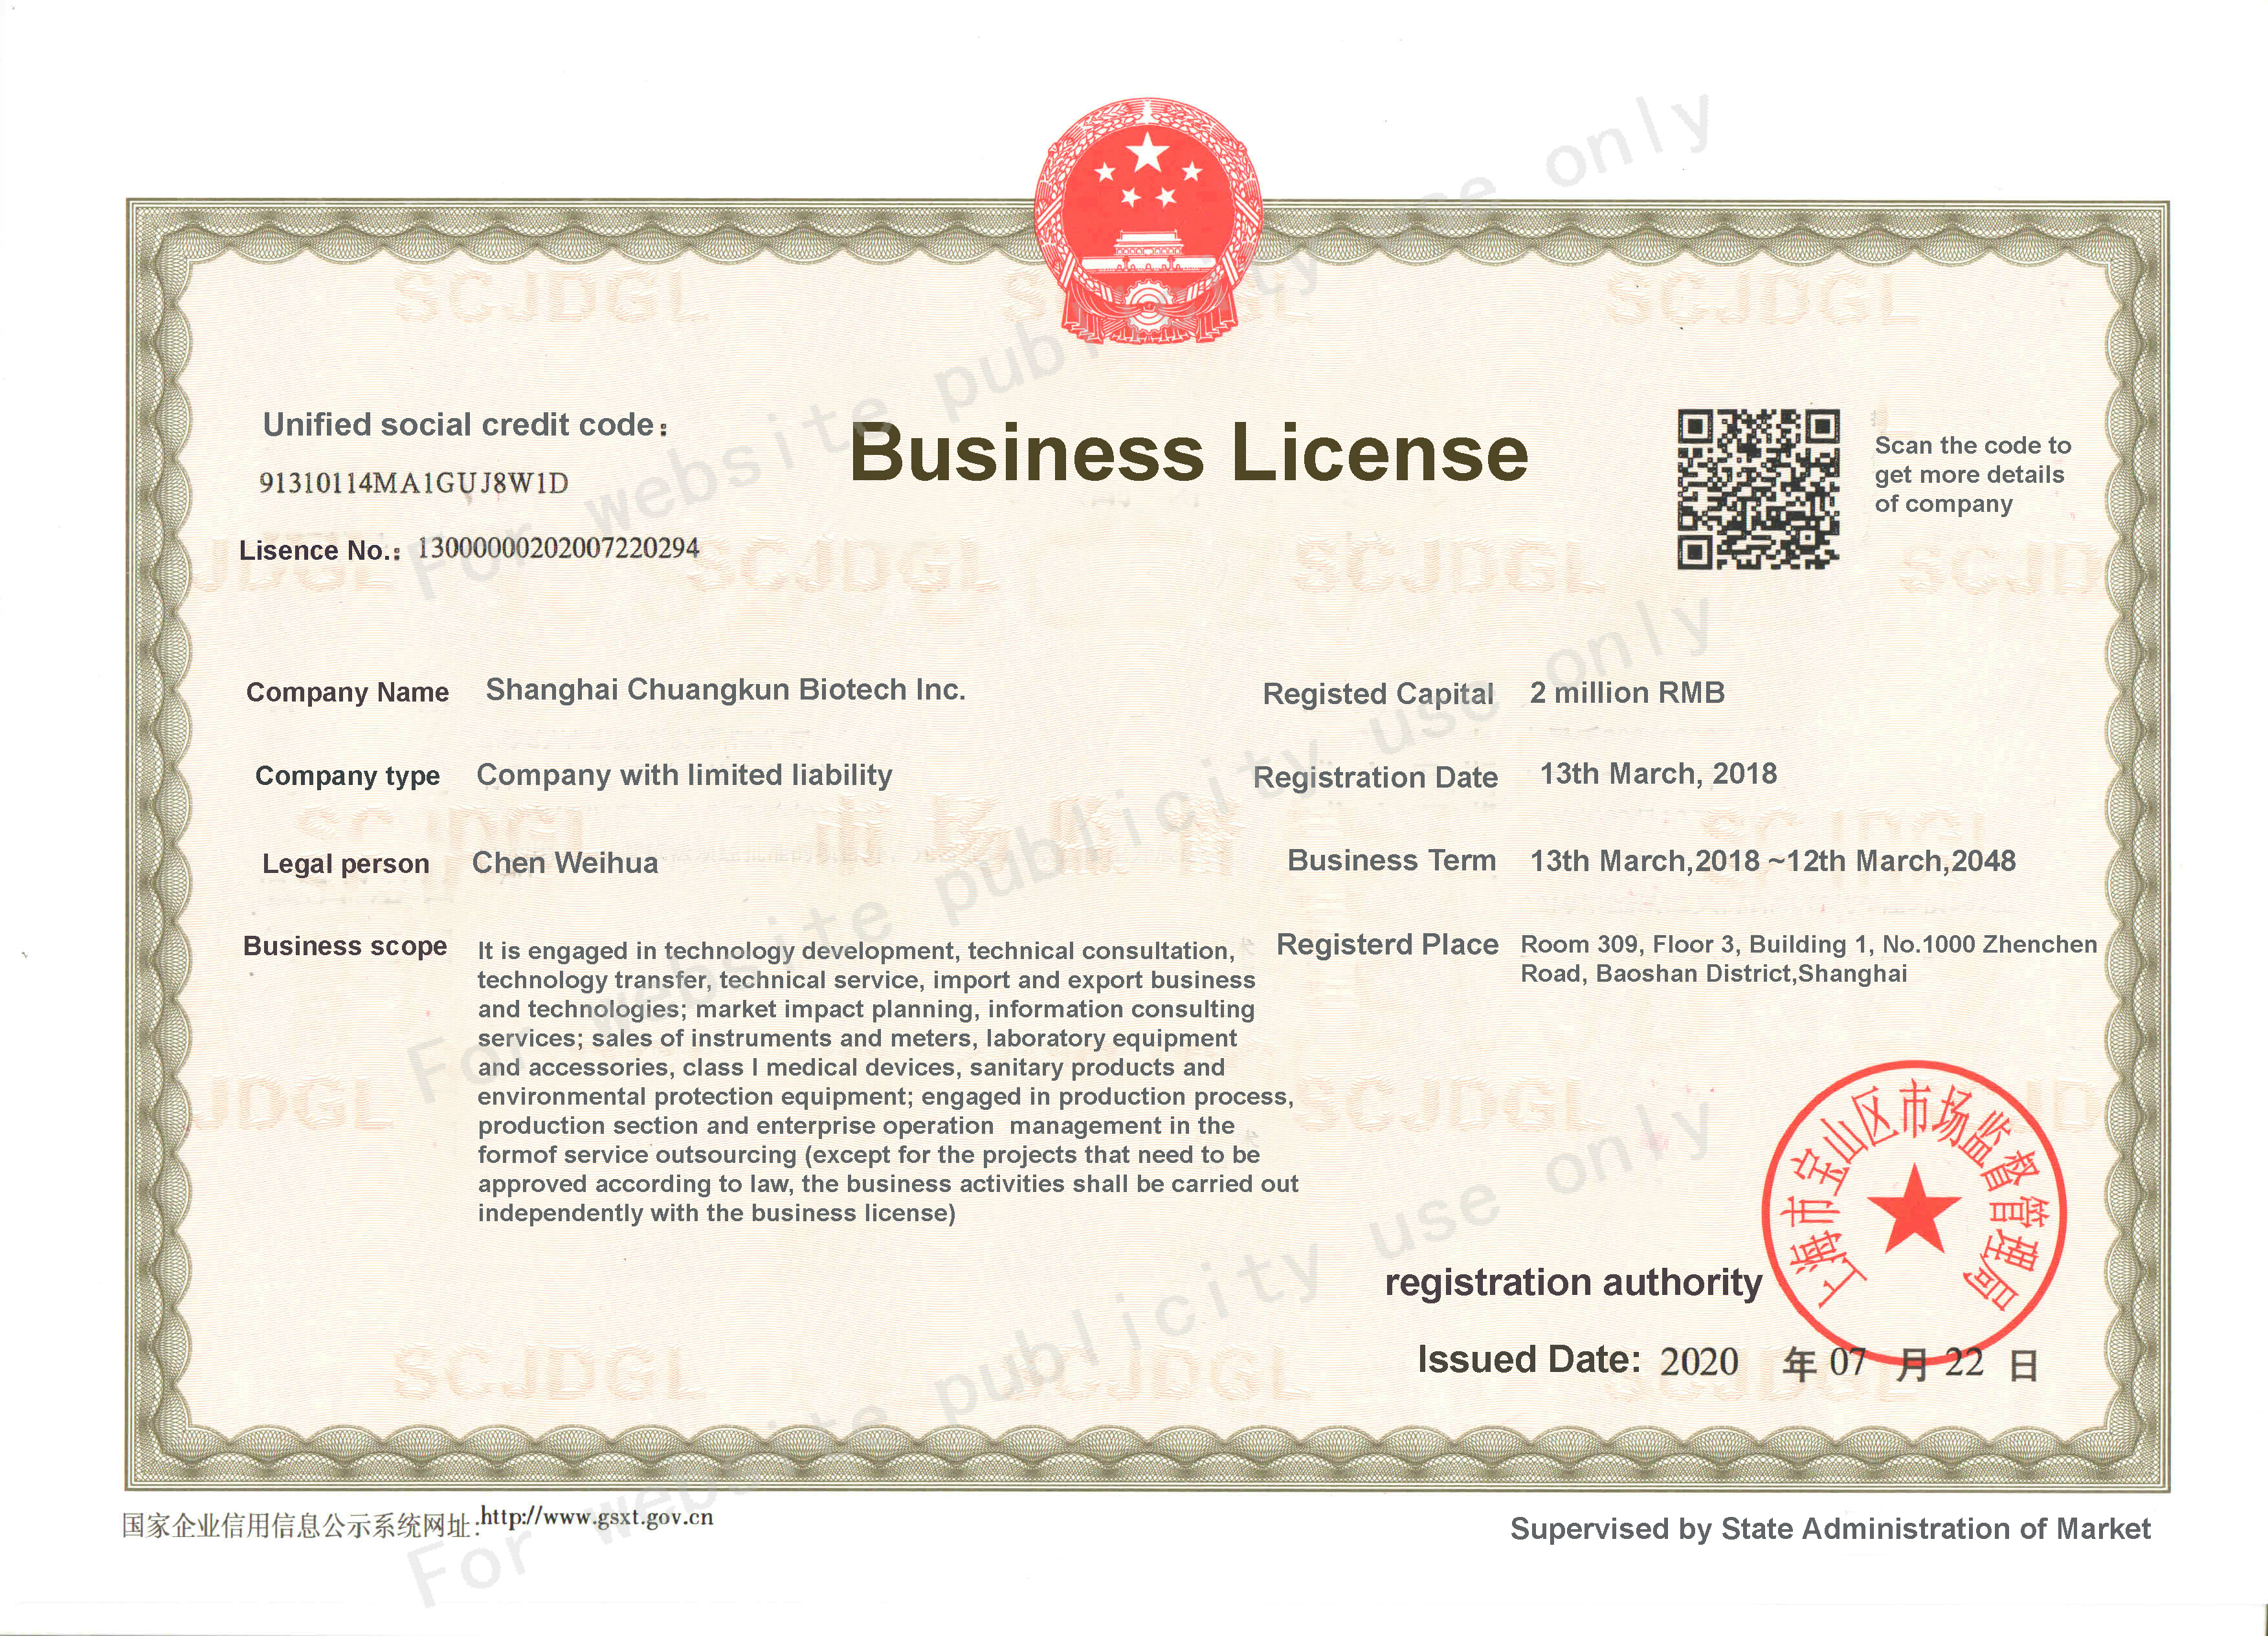 CHKBio business license-English